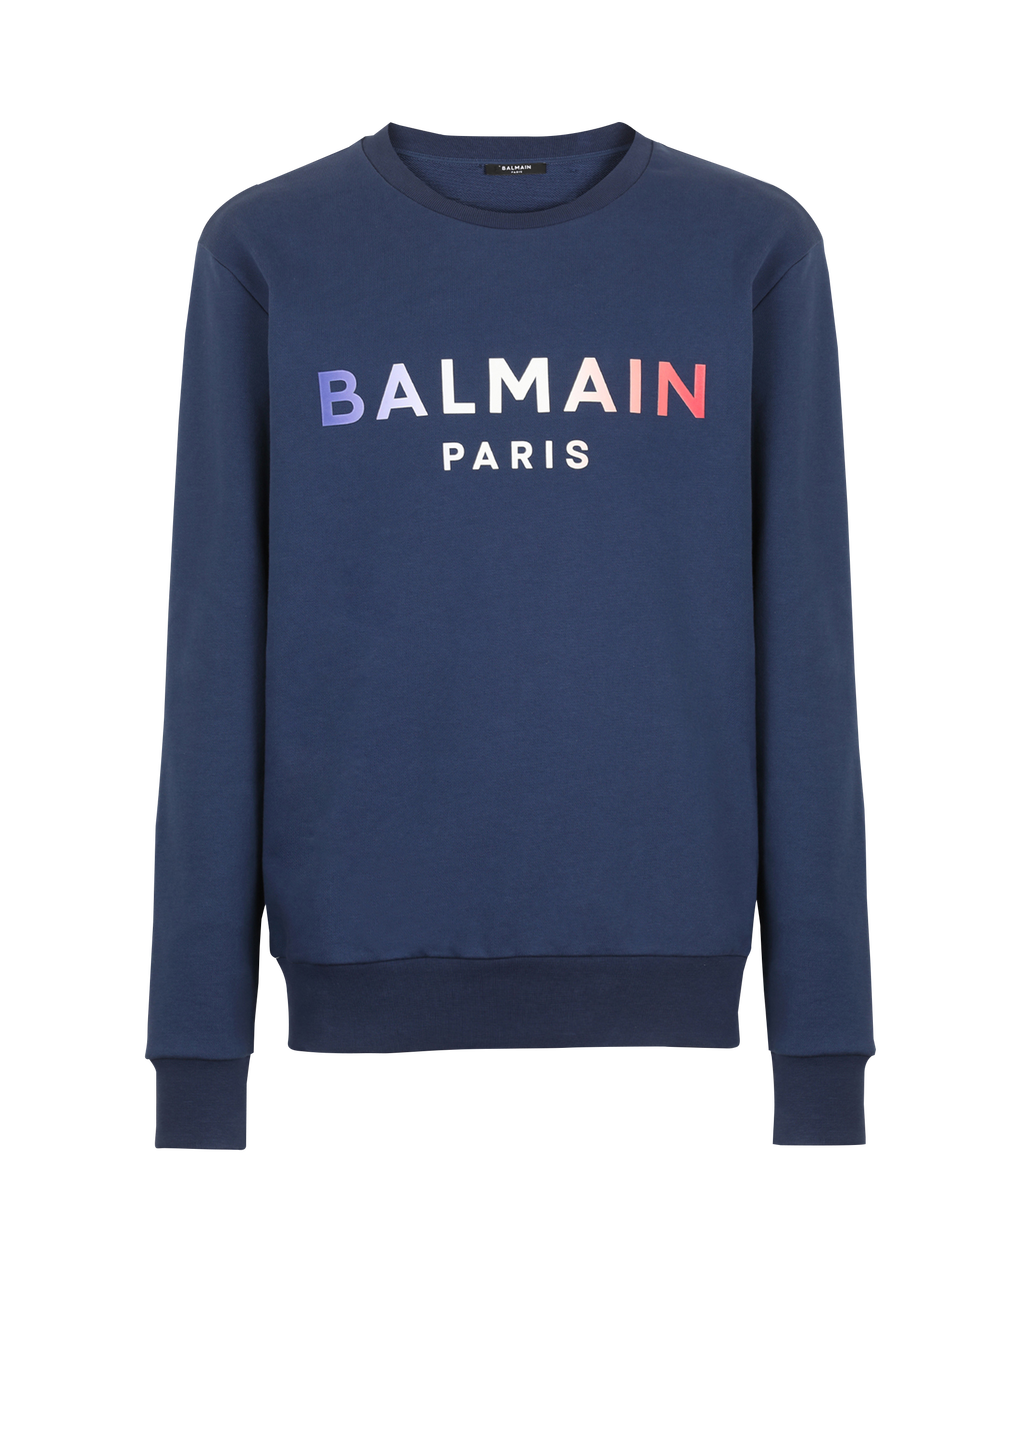 HIGH SUMMER CAPSULE - Cotton sweatshirt with Balmain Paris tie-dye logo print, navy, hi-res